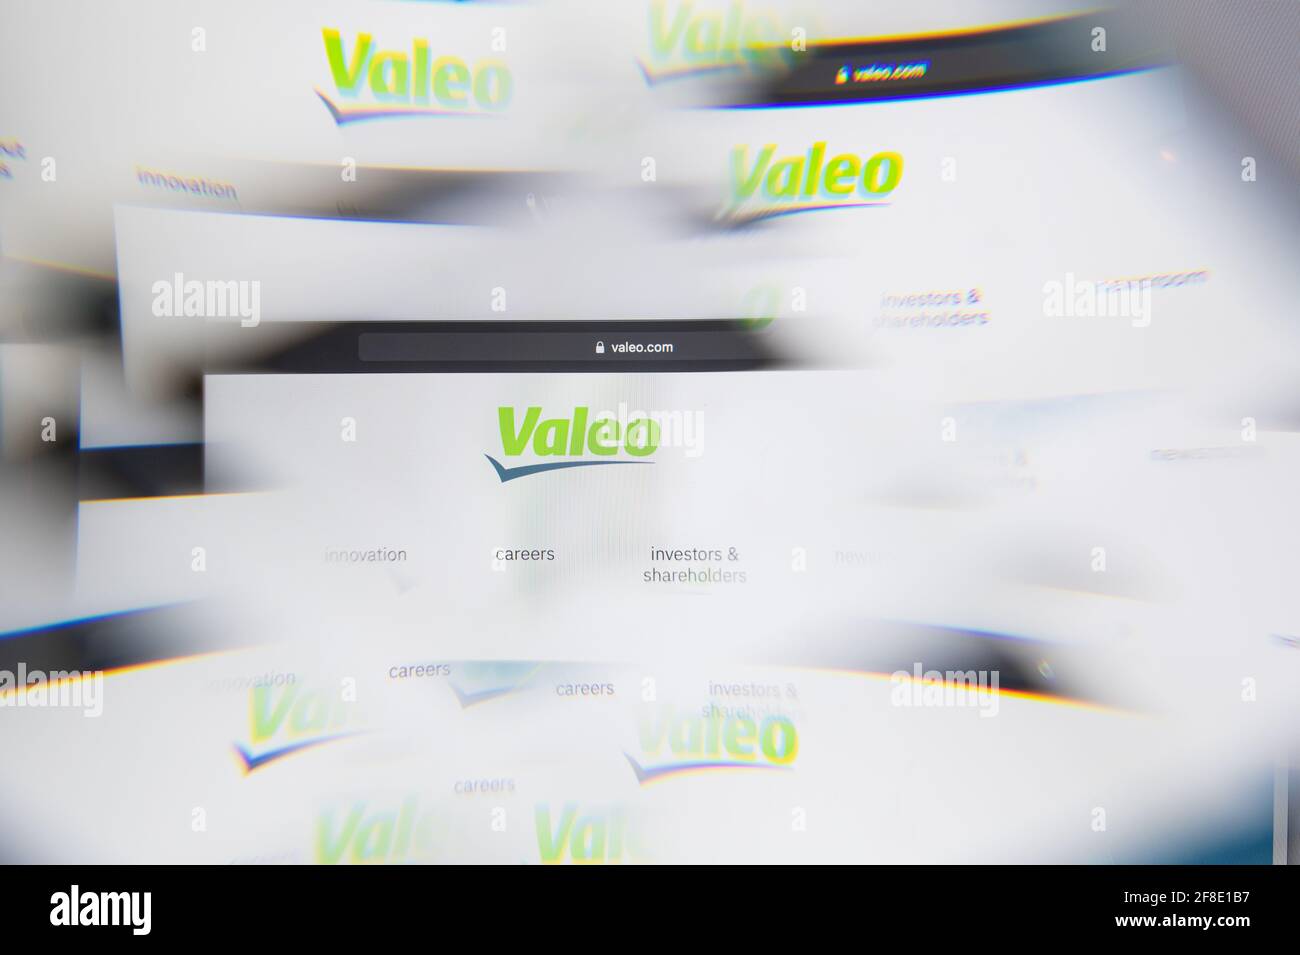 Milan, Italy - APRIL 10, 2021: Valeo logo on laptop screen seen through an optical prism. Illustrative editorial image from Valeo website. Stock Photo